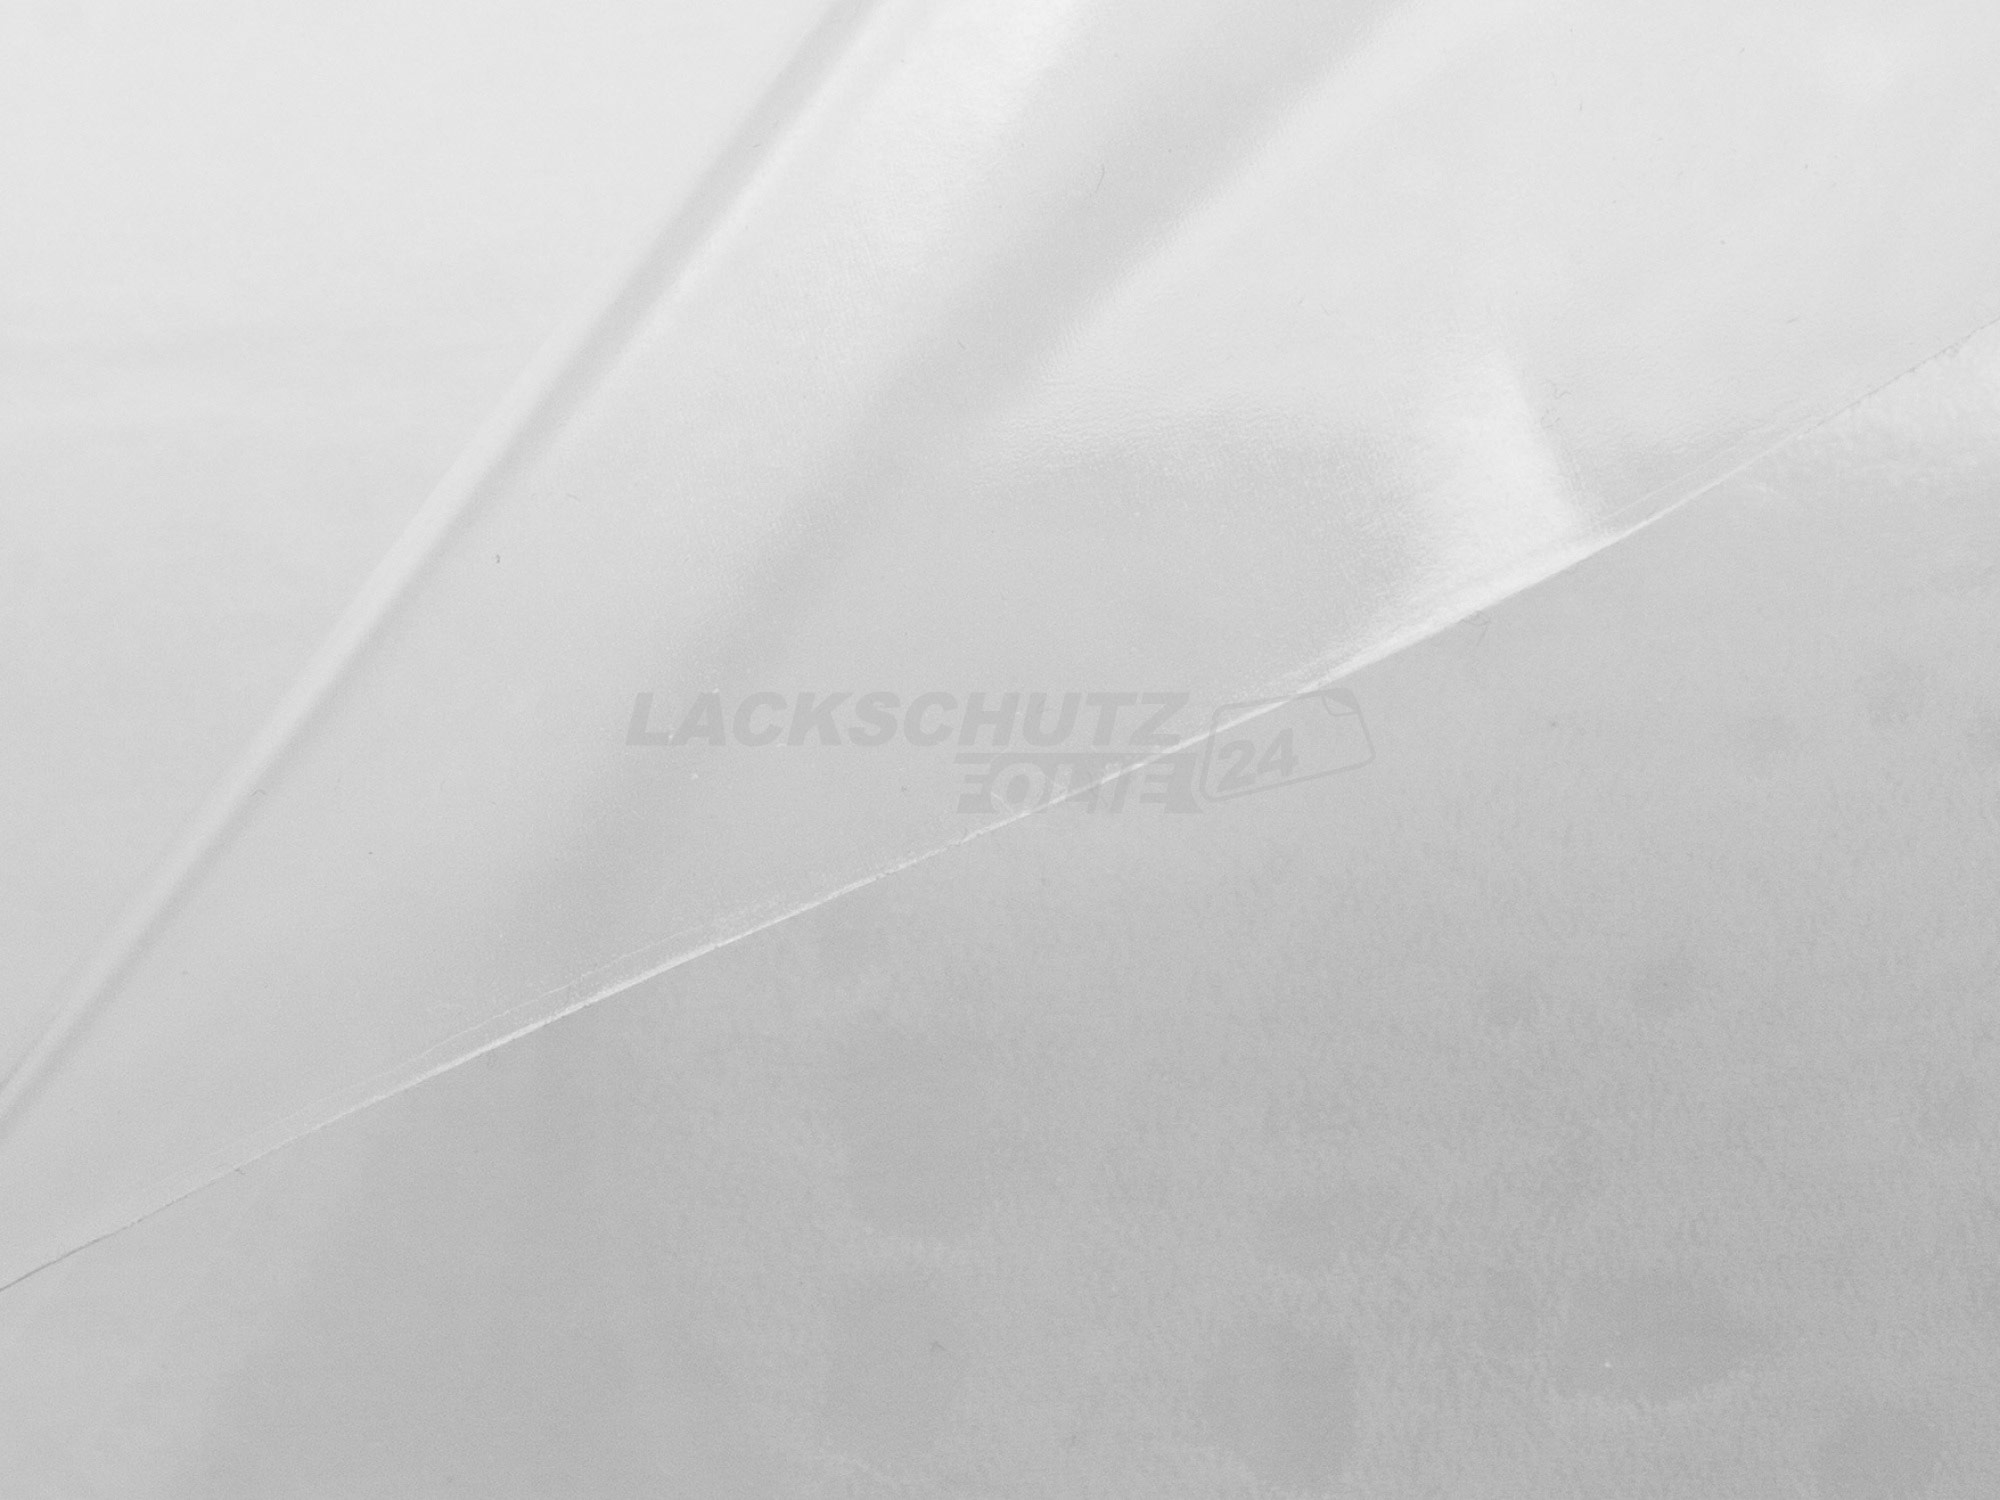 Ladekantenschutzfolie - Transparent Glatt Hochglänzend 240 µm stark für Audi A6 Avant (Kombi) C6, Typ 4F, Facelift, ab BJ 10/2008-09/2011